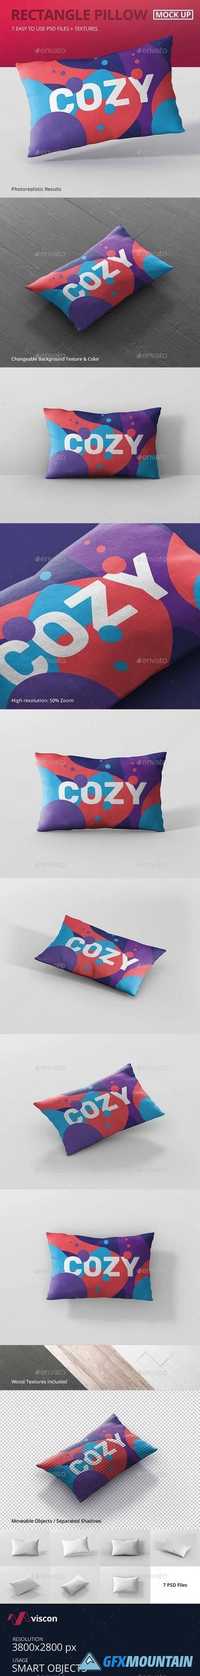 Pillow Mockup - Rectangle 20133703